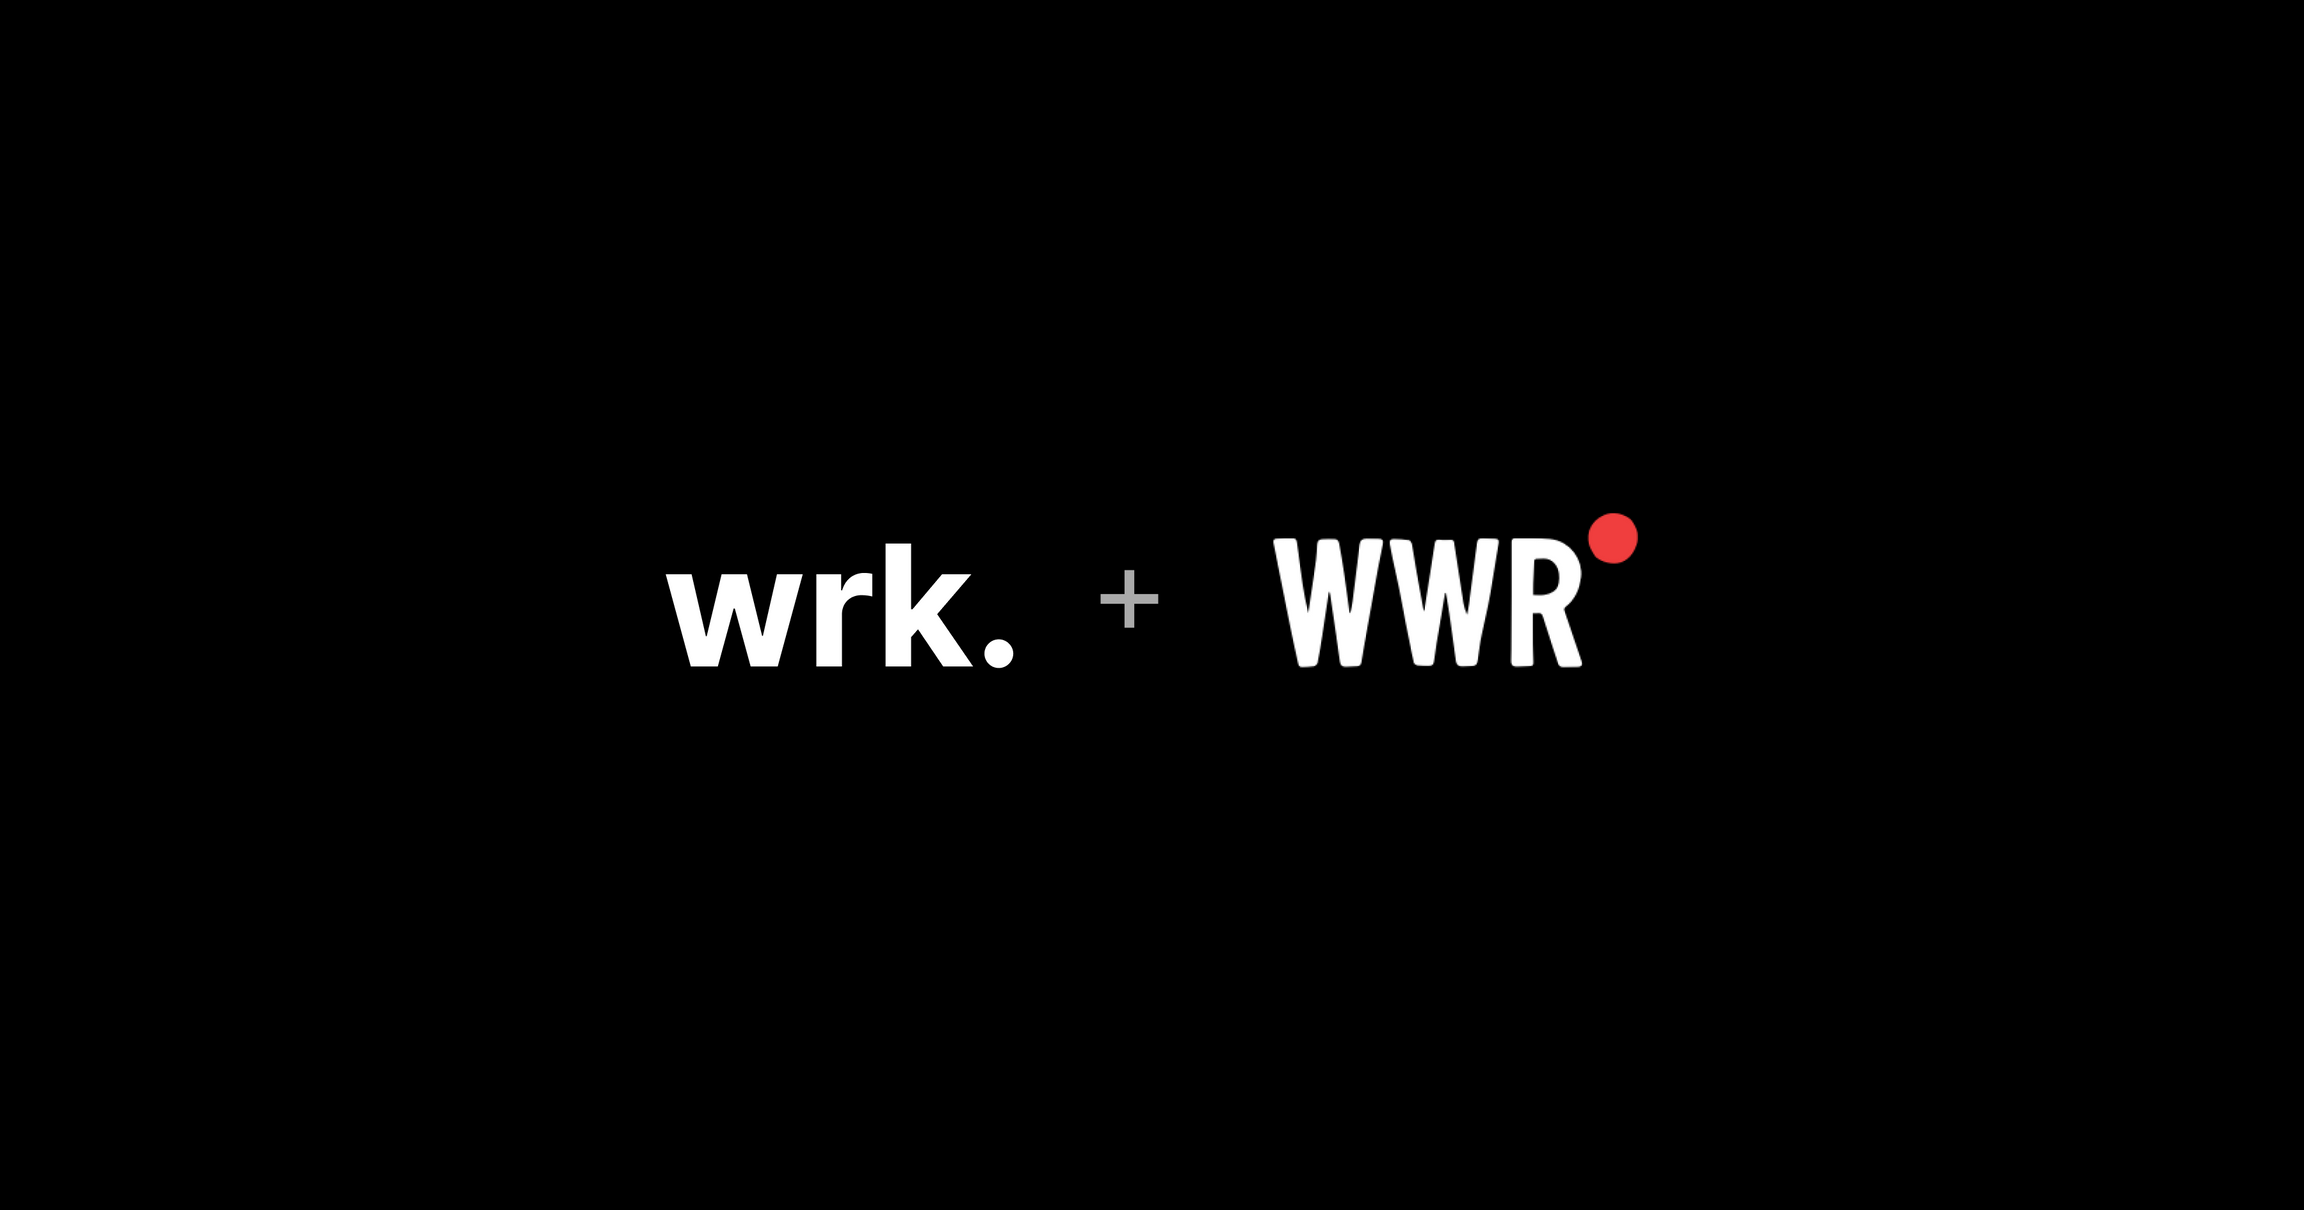 The Wrk and WeWorkRemotely logos